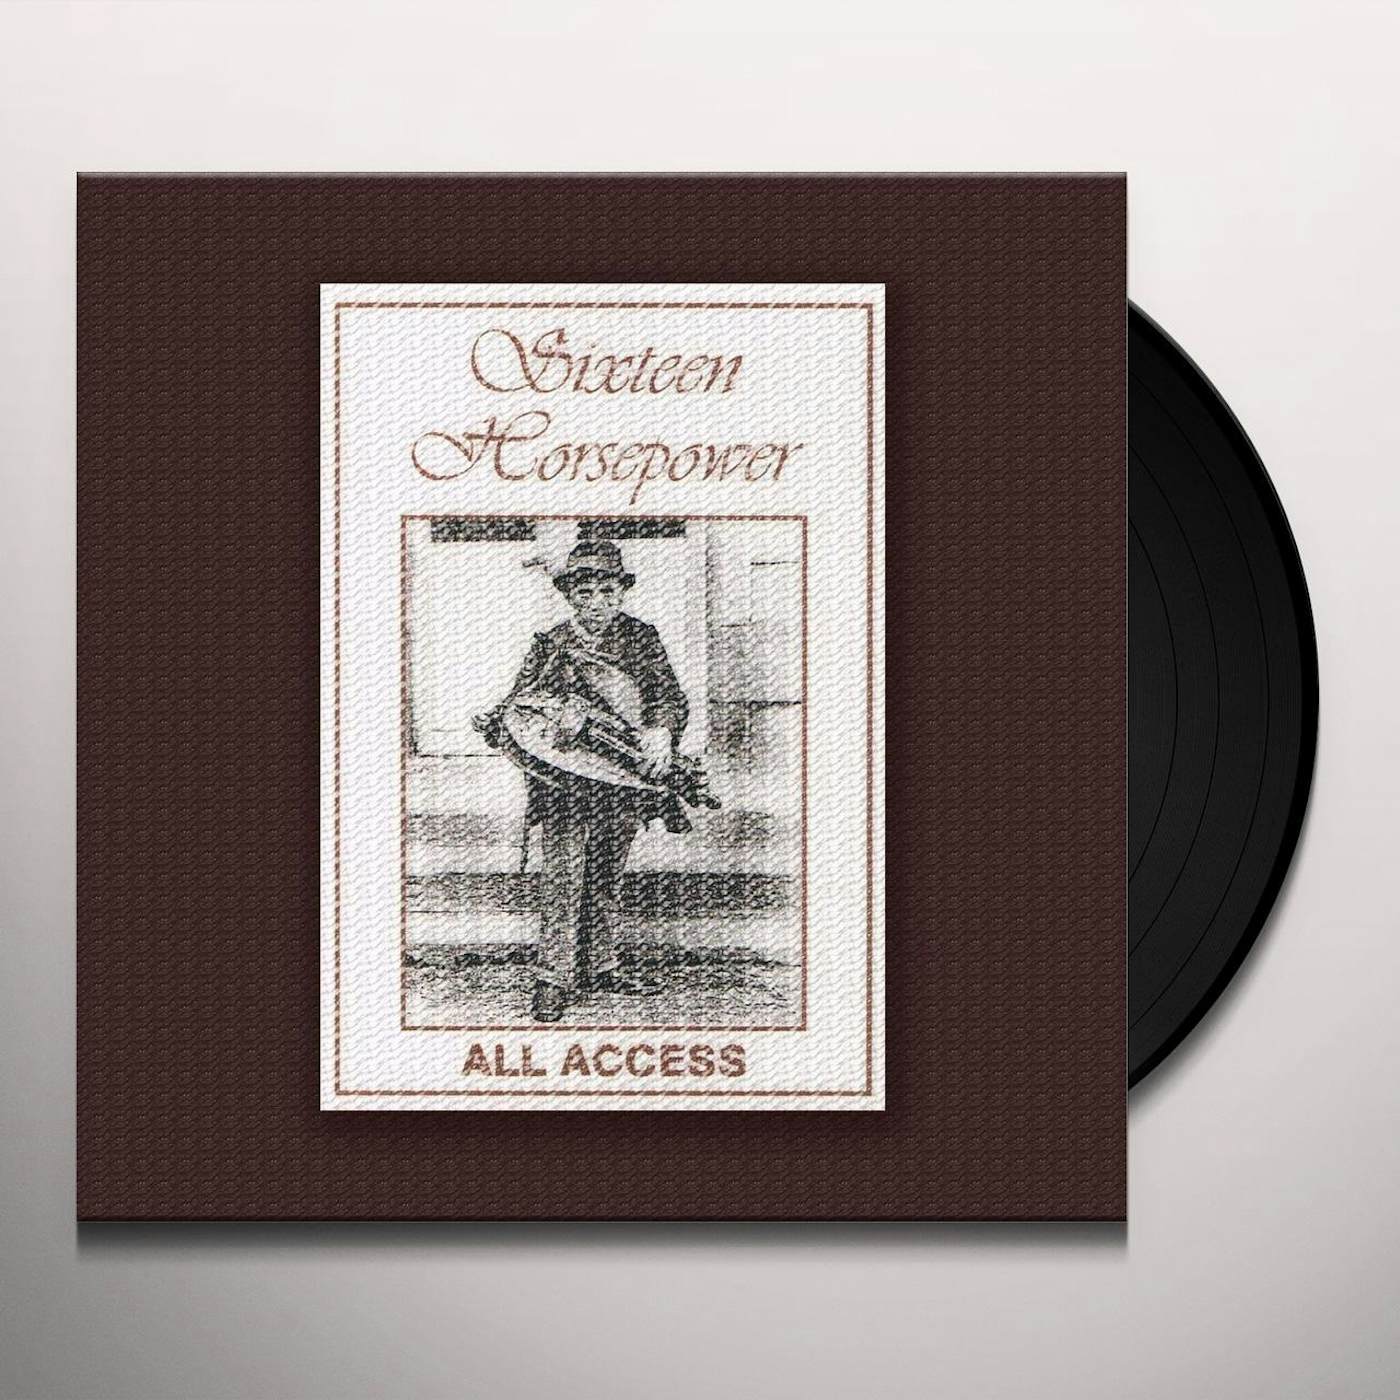 16 Horsepower All access Vinyl Record